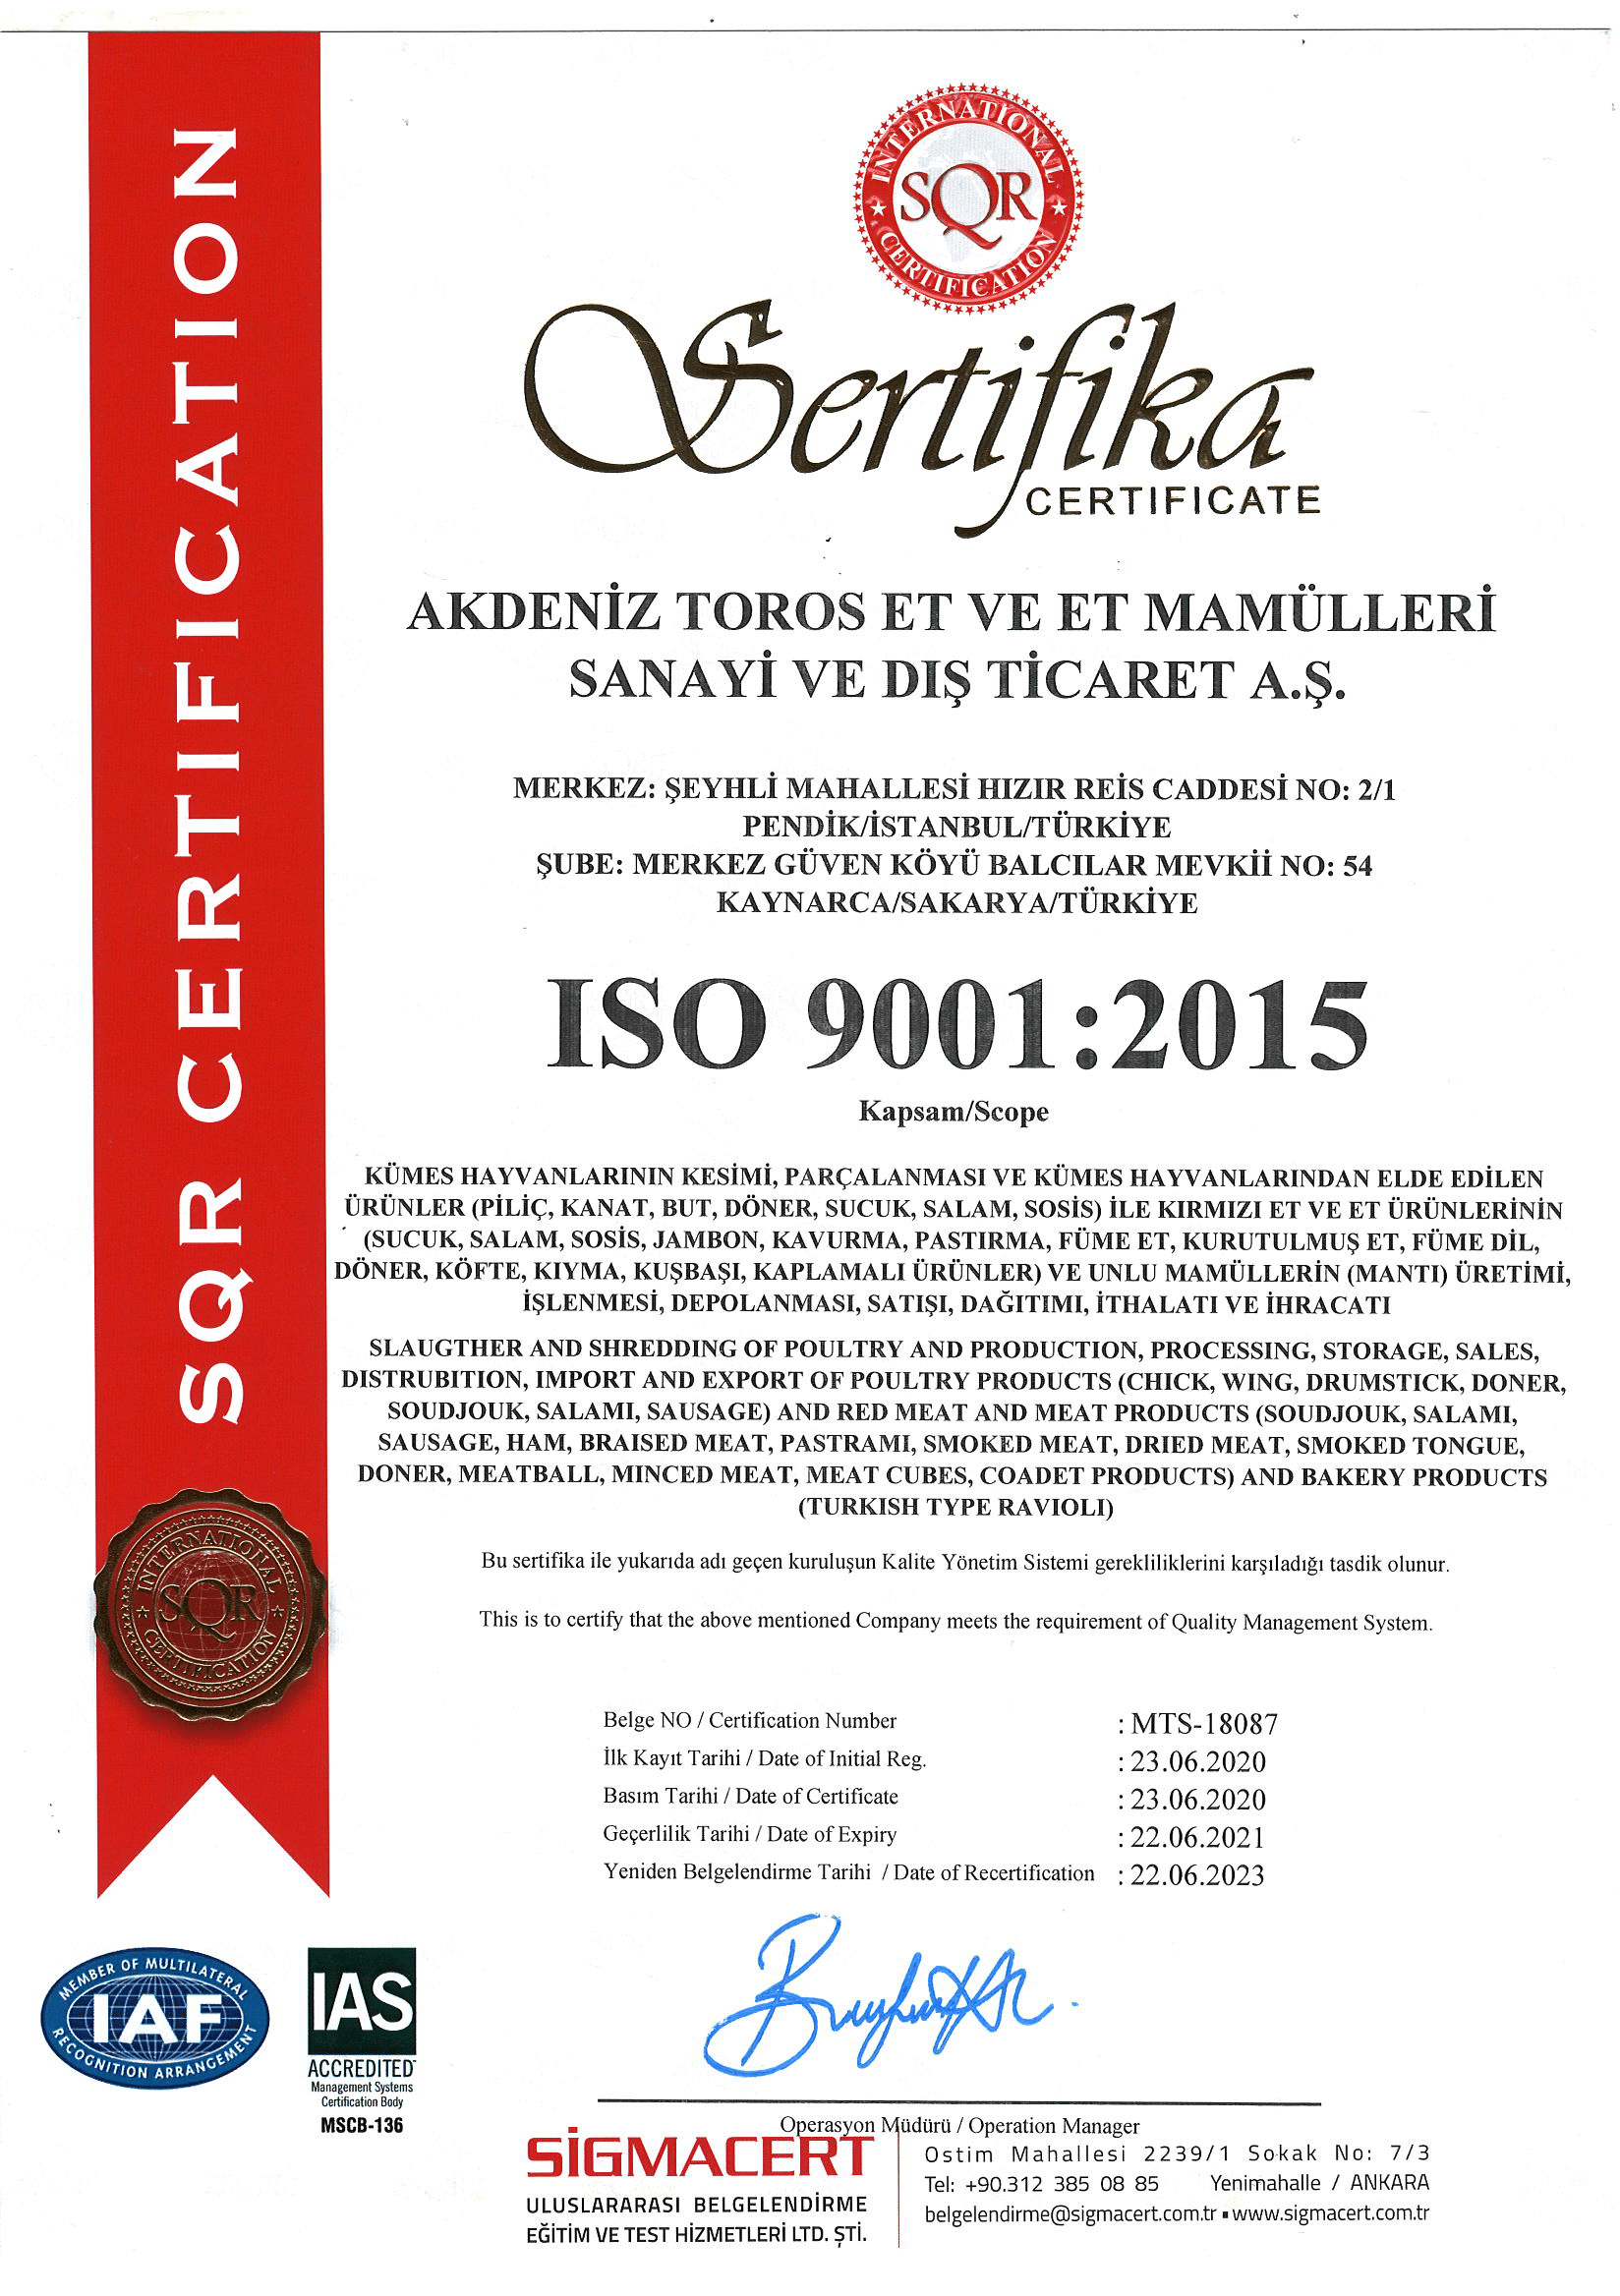 AKDENİZ TOROS ISO 9001 BELGEMİZ